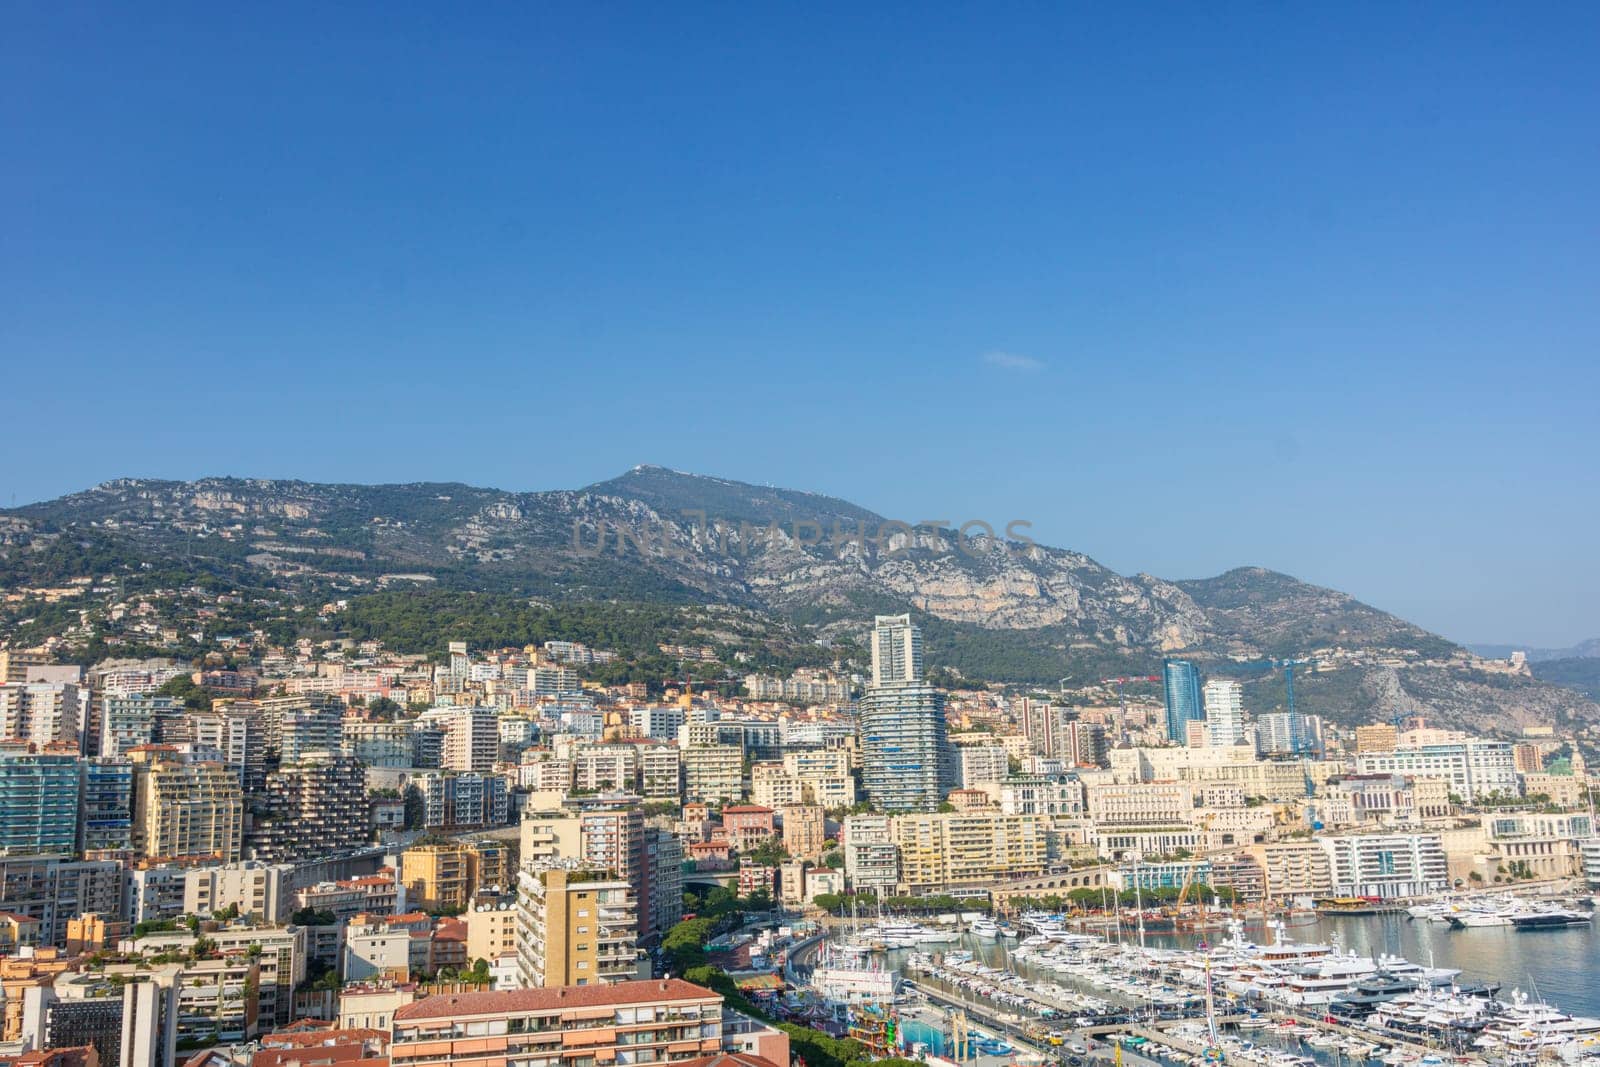 Panoramic view of Monte Carlo marina and cityscape. Principality of Monaco, French Riviera